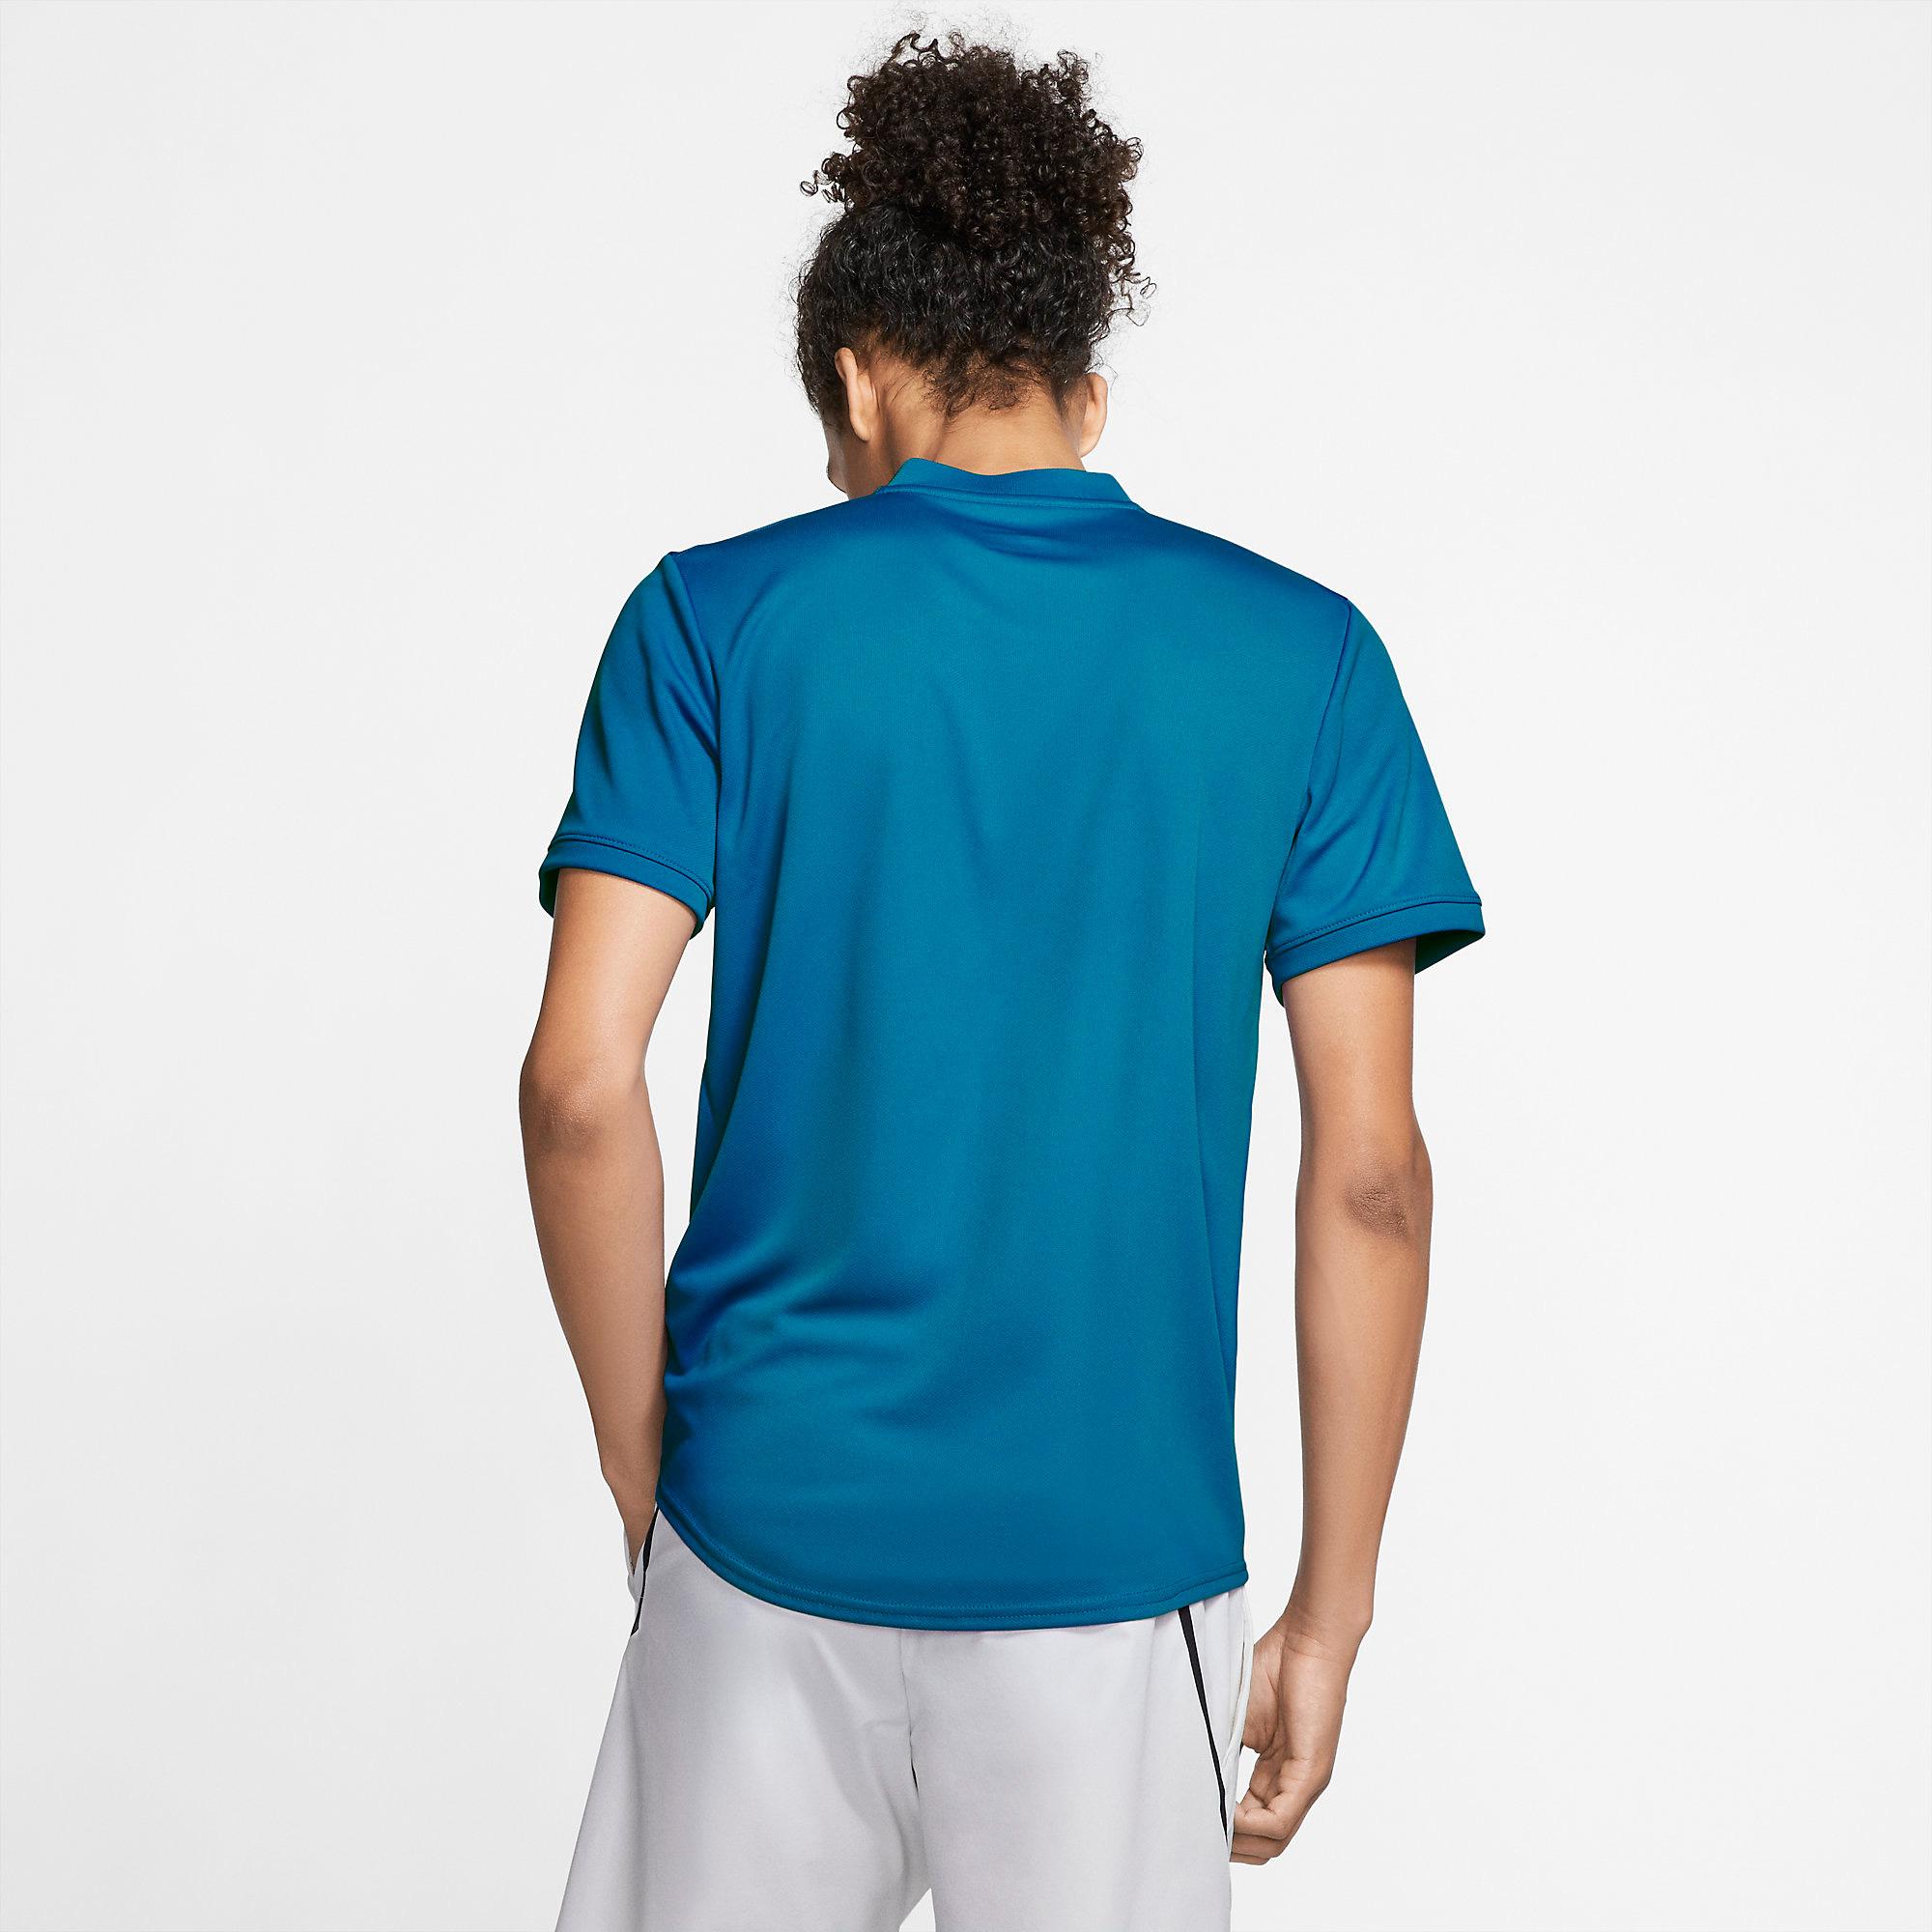 Nike Mens Dri-FIT Blade Polo - Neon Turquoise/White - Tennisnuts.com